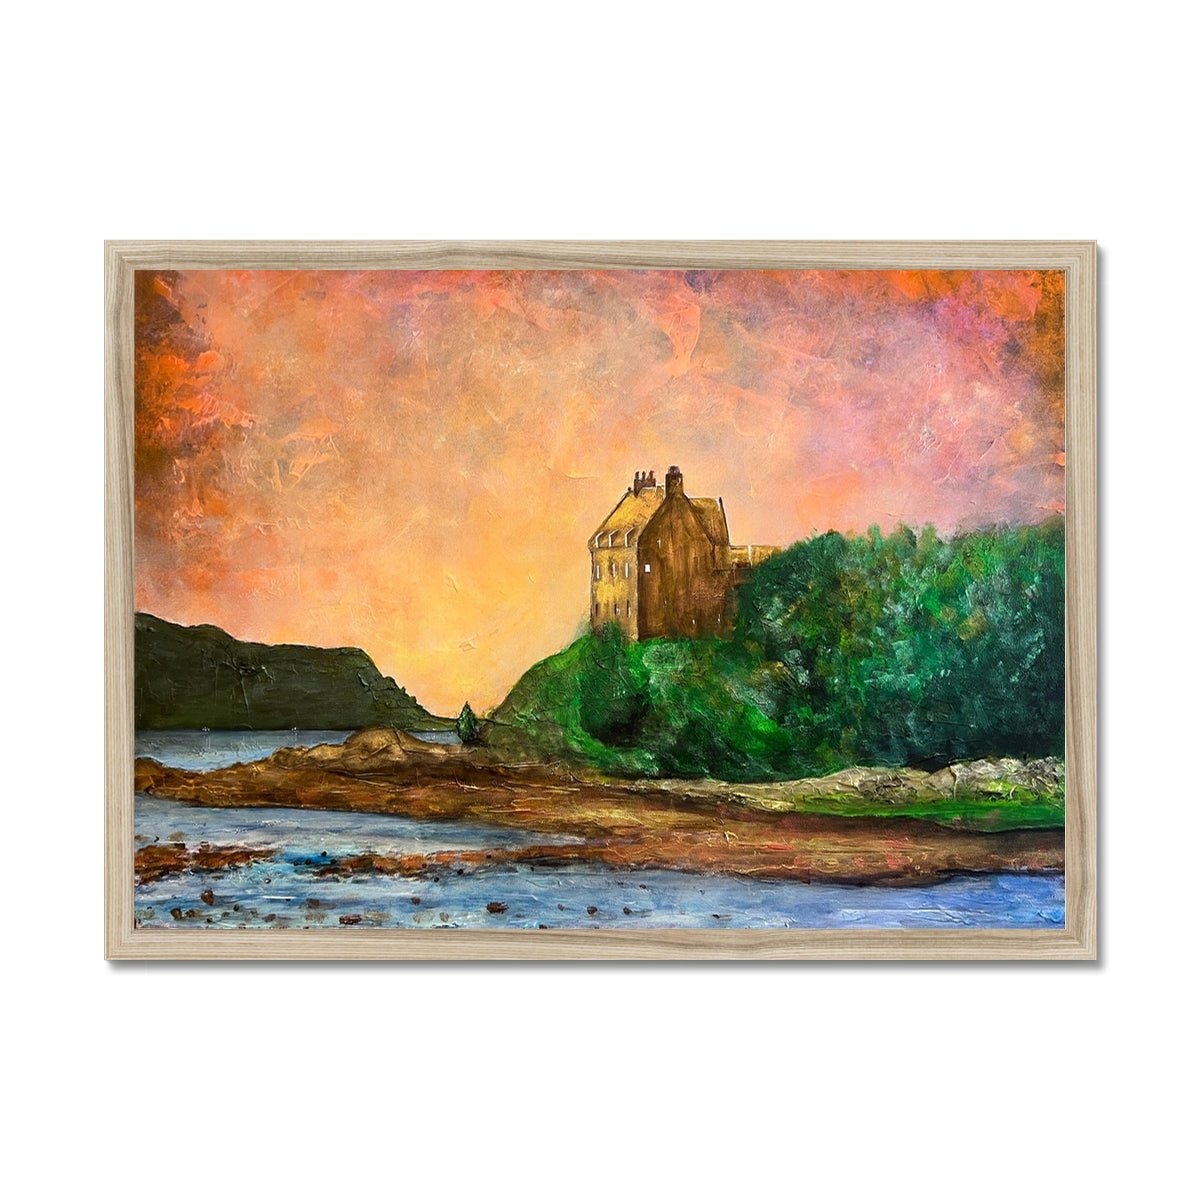 Duntrune Castle Painting | Framed Prints From Scotland-Framed Prints-Scottish Castles Art Gallery-A2 Landscape-Natural Frame-Paintings, Prints, Homeware, Art Gifts From Scotland By Scottish Artist Kevin Hunter